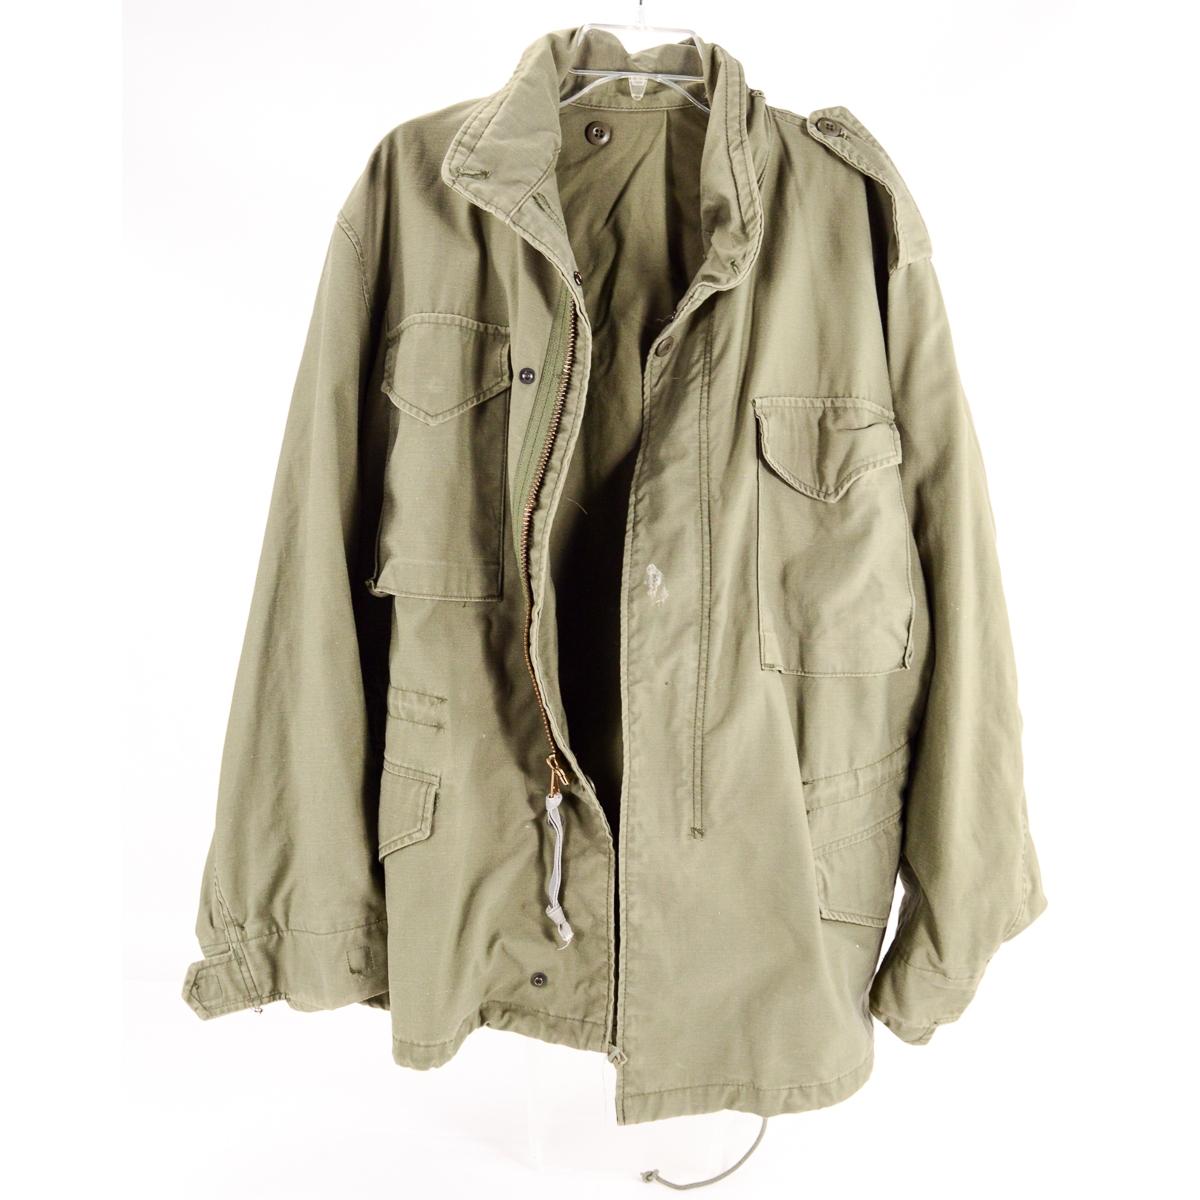 Post WWII Dress Tunics and Field Jacket 6Pcs